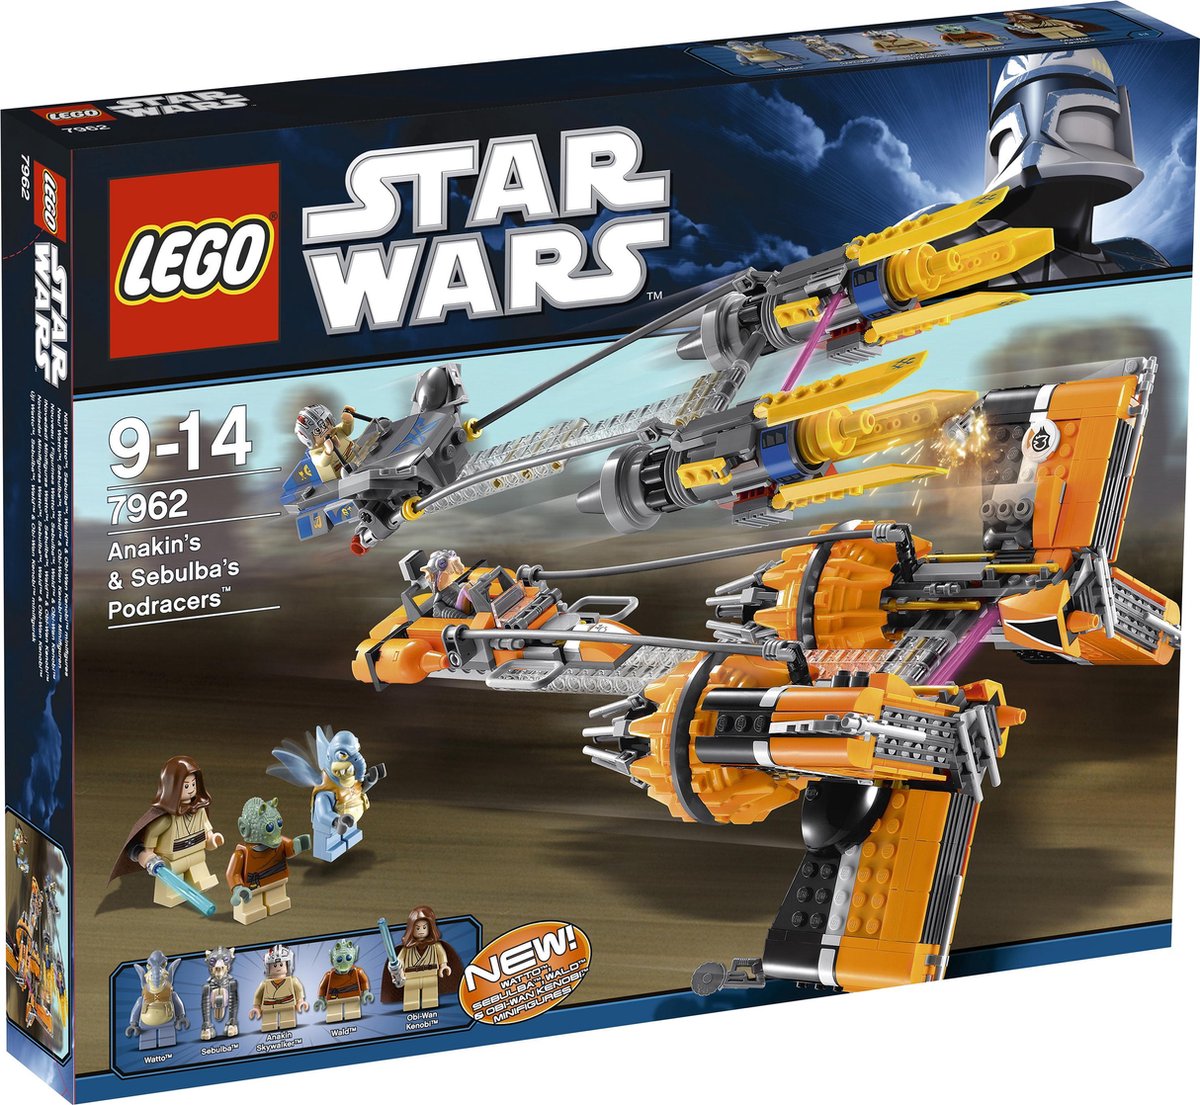 LEGO Star Wars Anakin's & Sebulba's Podracers - 7962